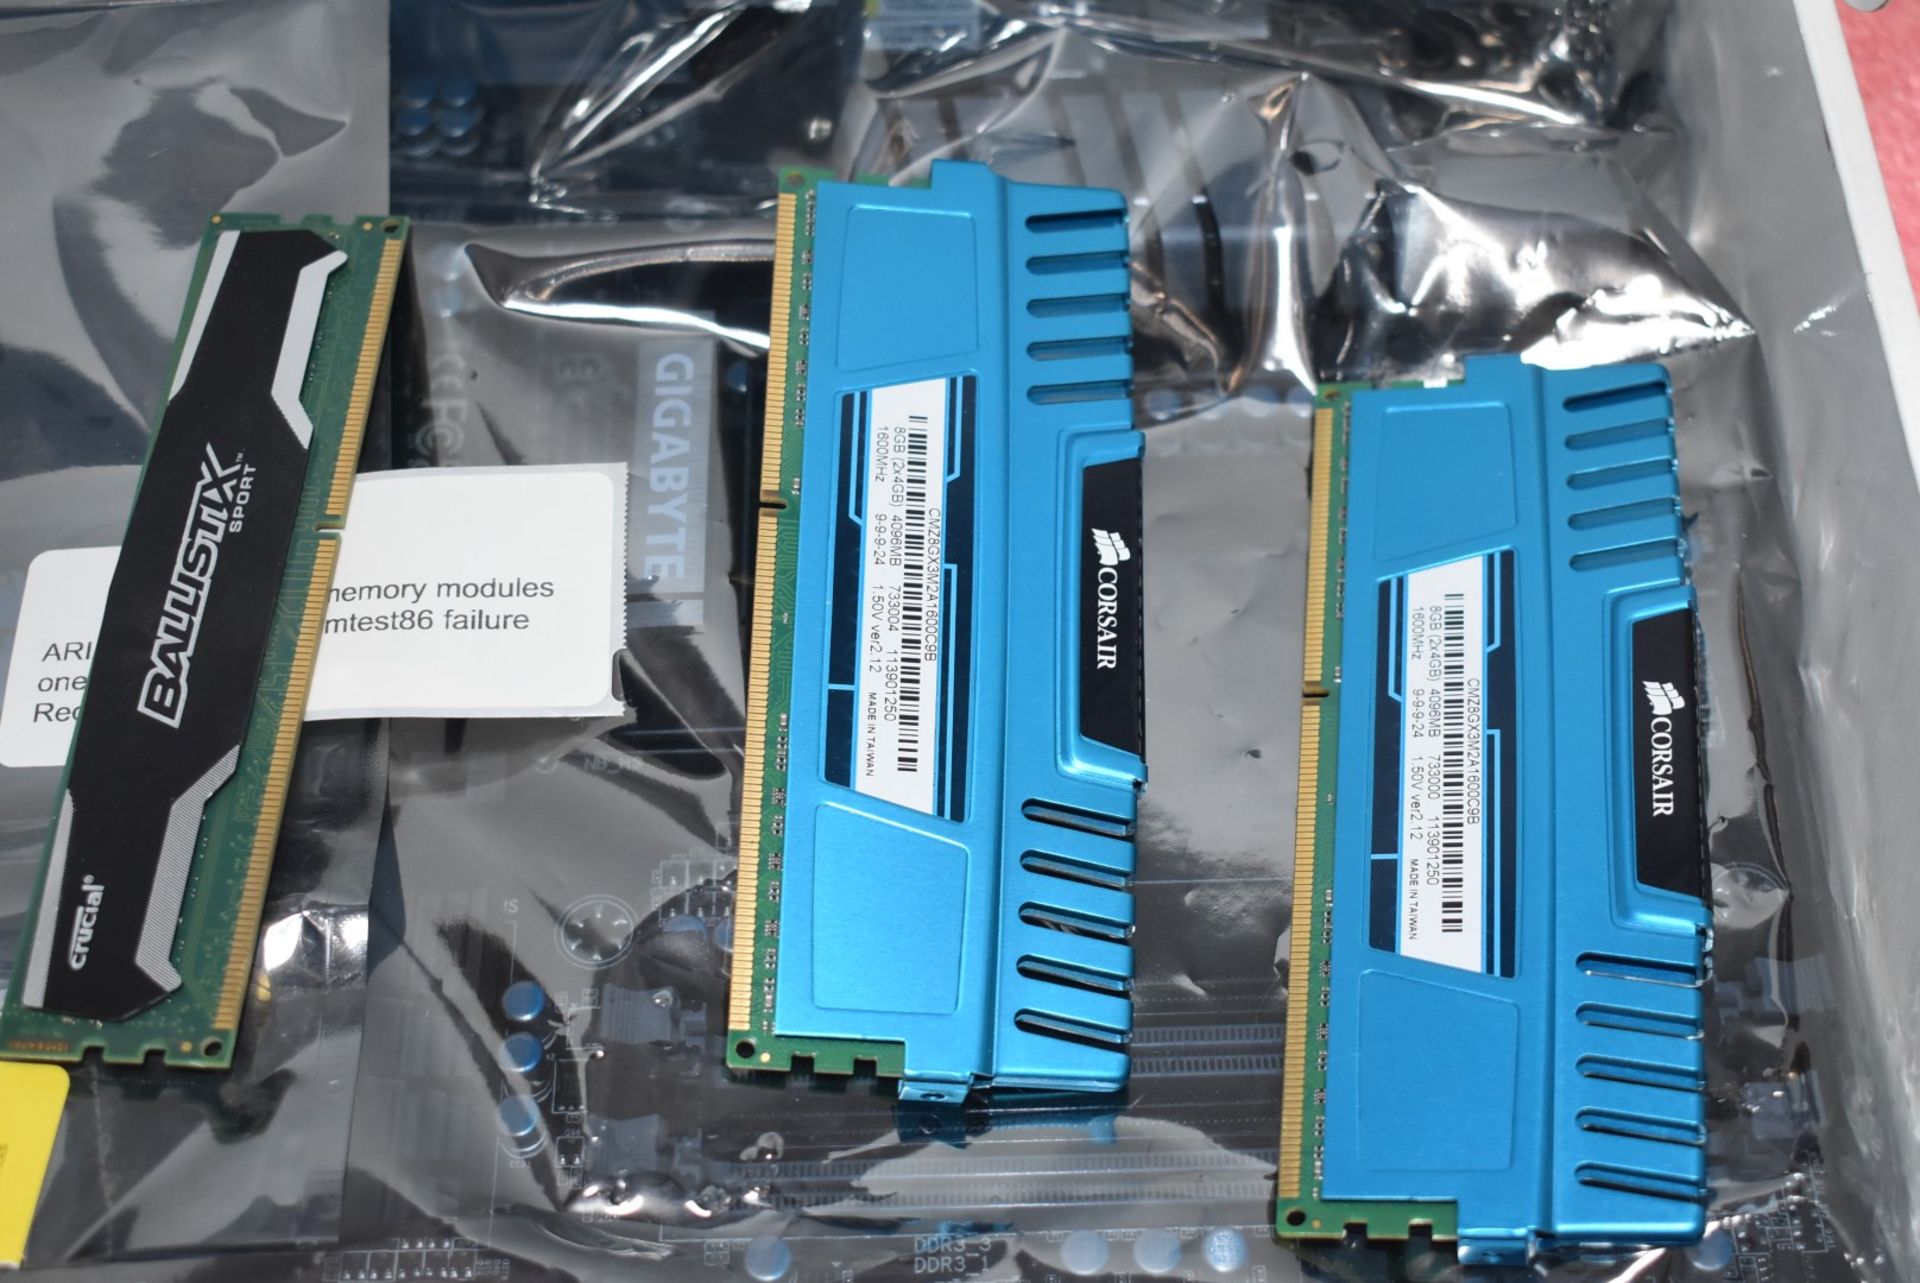 1 x Gigabyte GA-990FXA-UD3 AM3+ Motherboard With 8GB Ram - Includes Original Box - Image 6 of 7